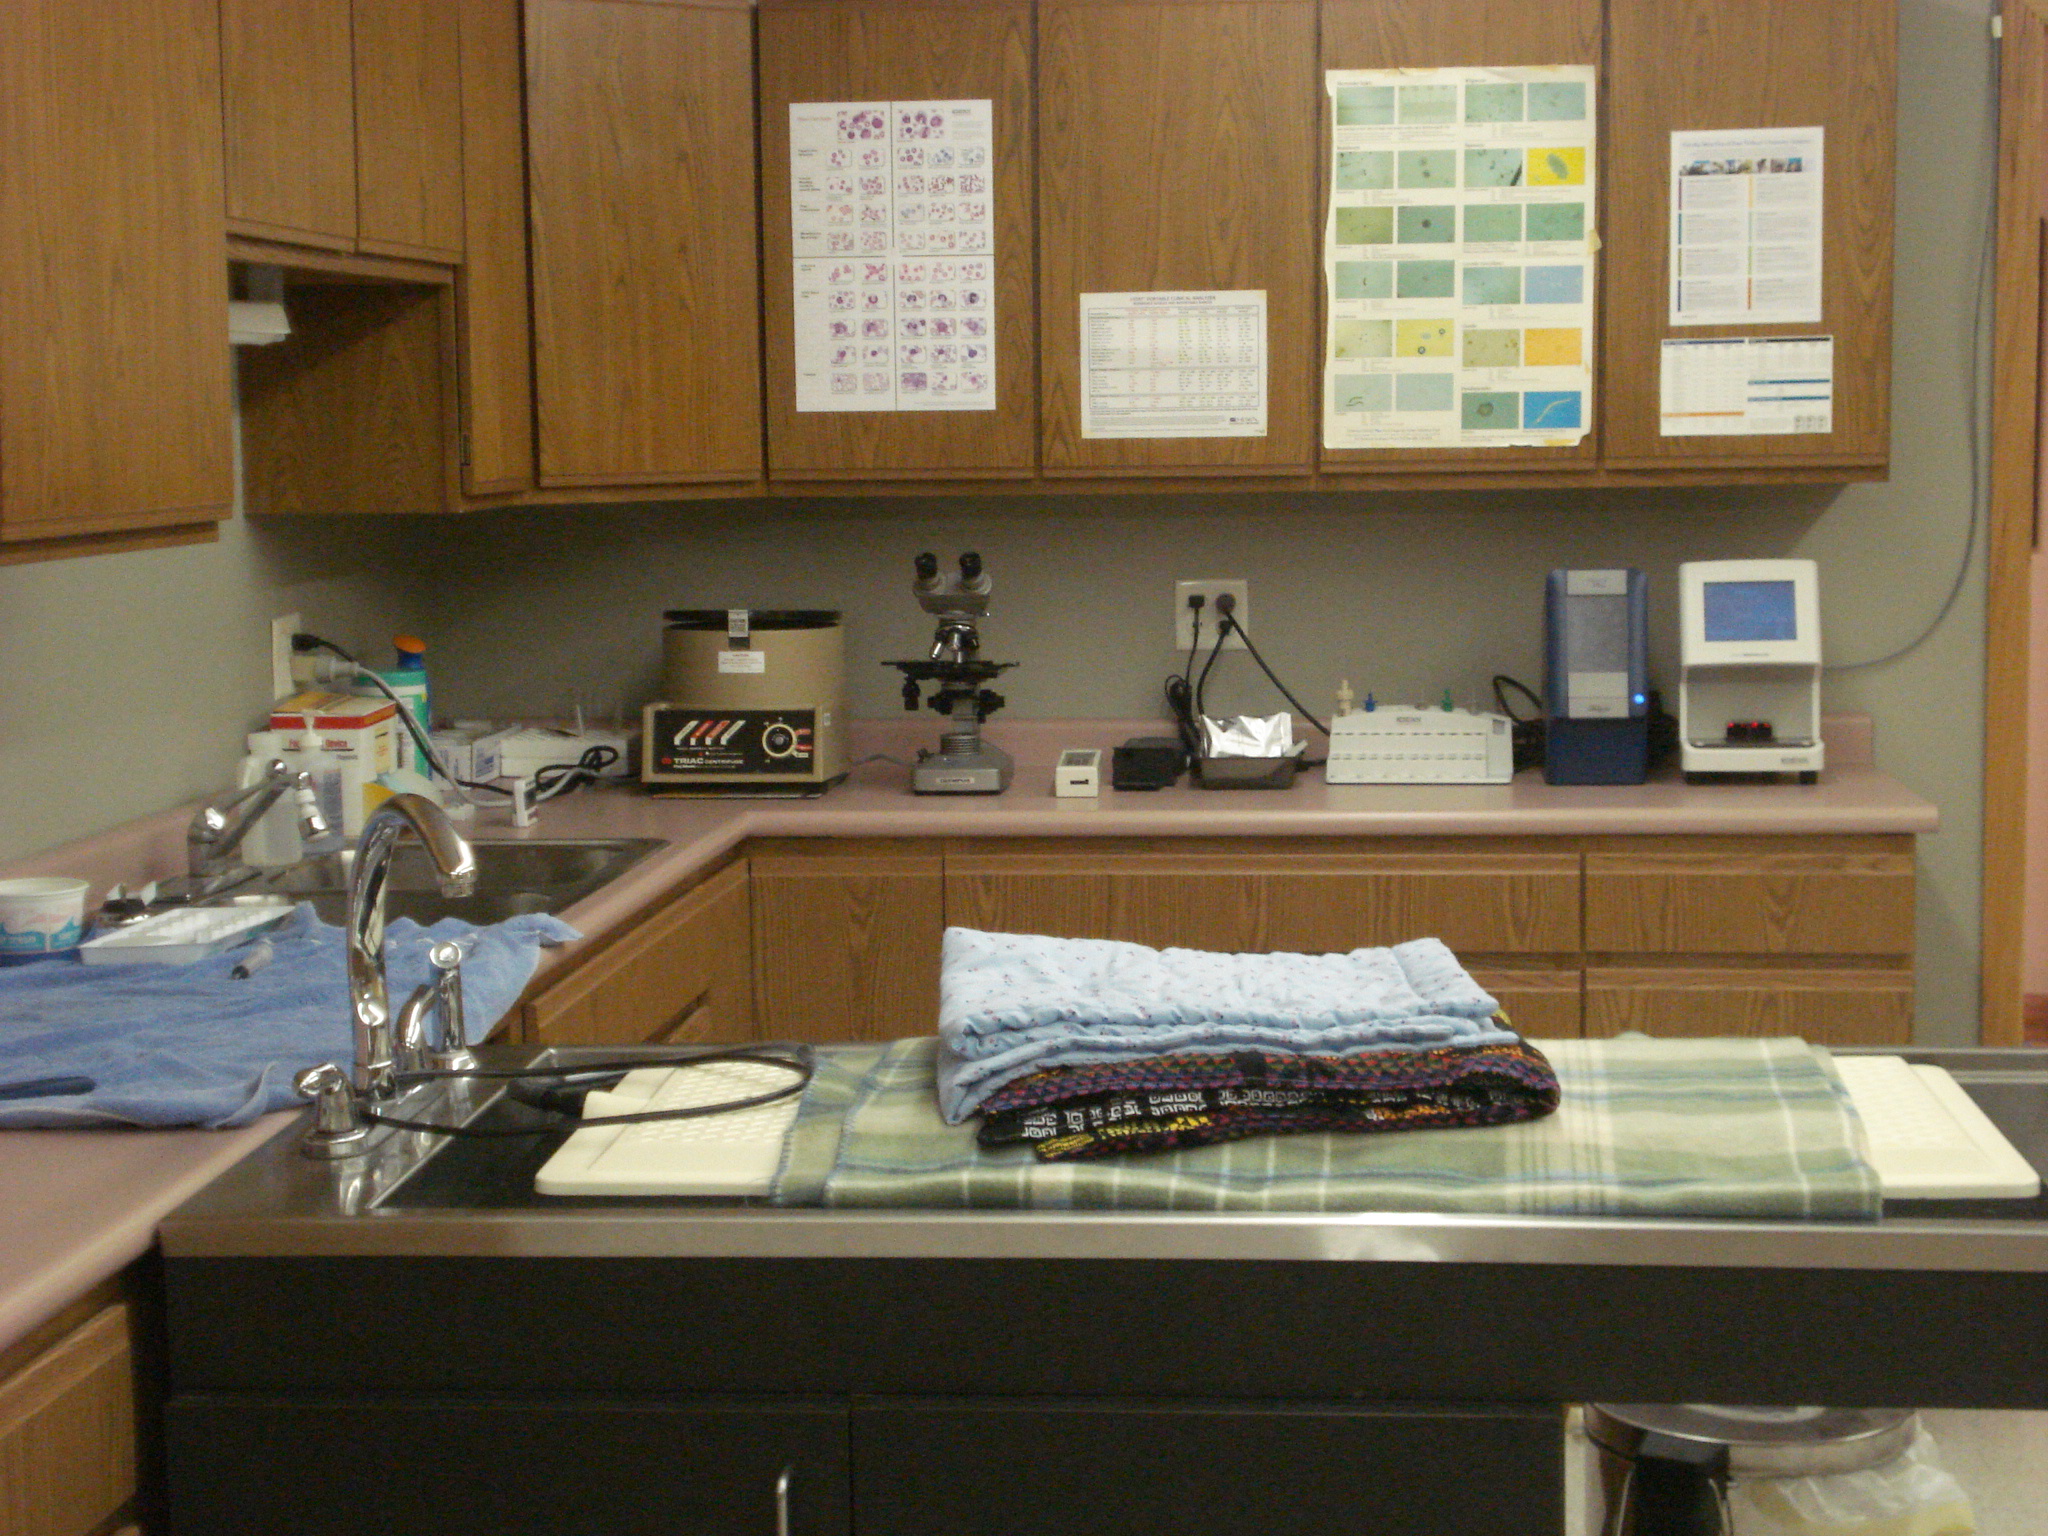 Treatment Area and Laboratory